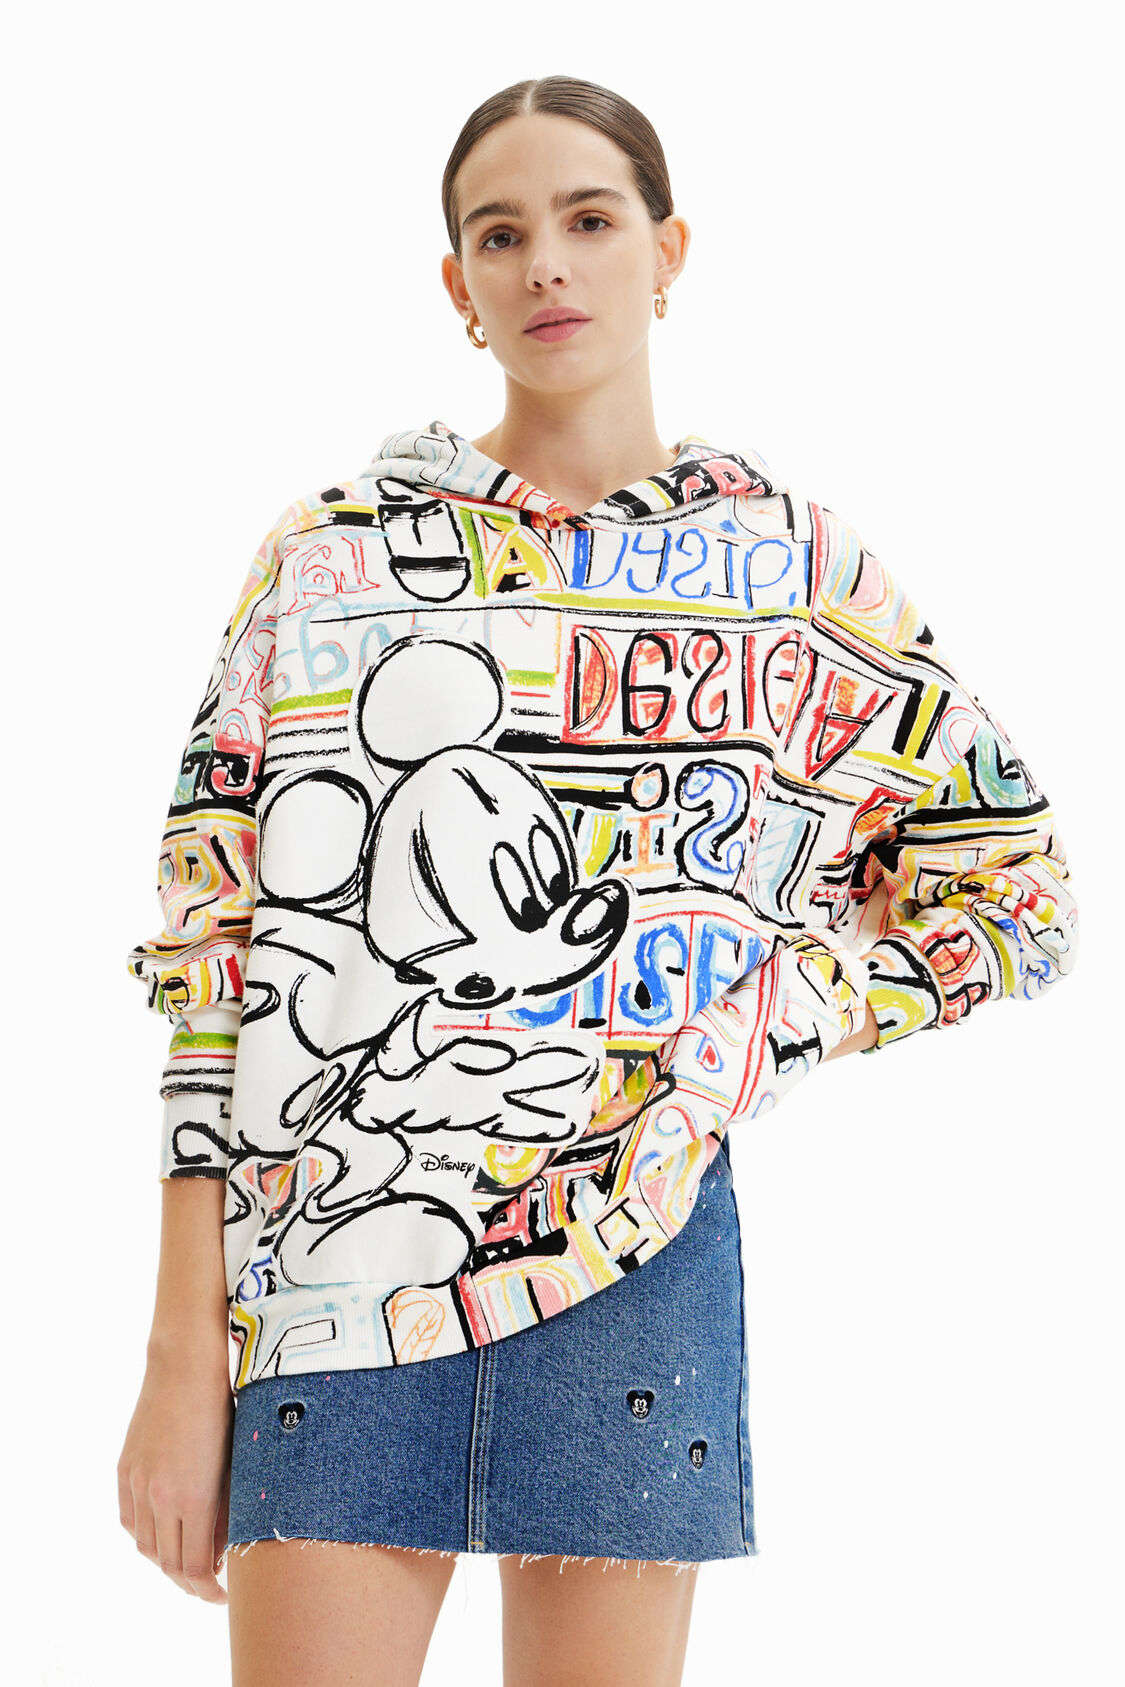 Verdraaiing waardigheid Meestal Women's Disney's Mickey Mouse illustration sweatshirt I Desigual.com